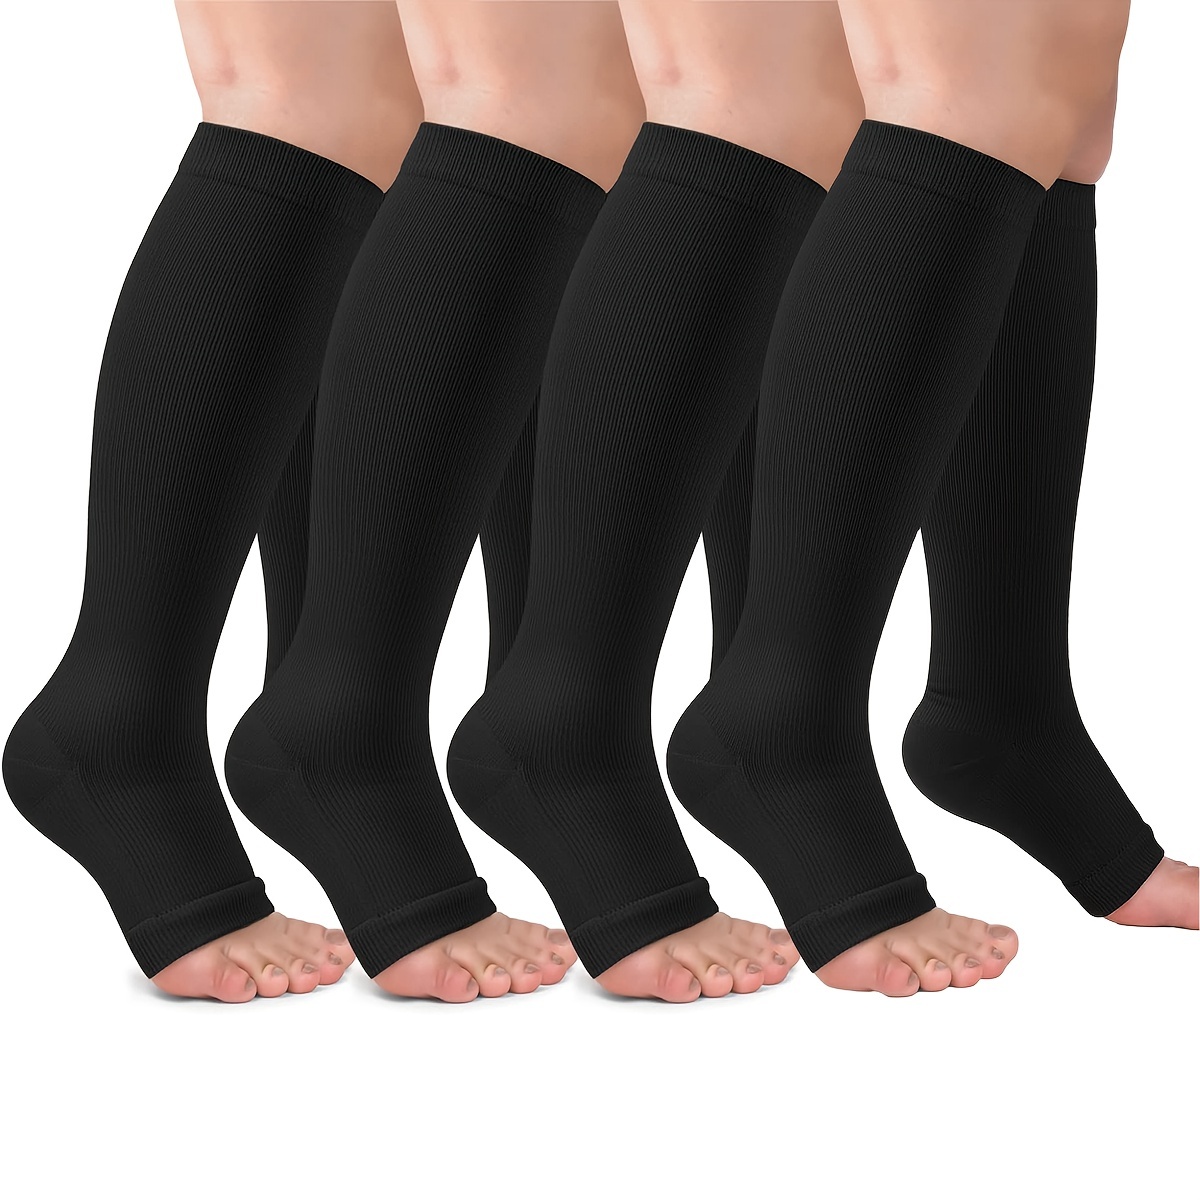 Ludlz Compression Socks,Knee-Hi Compression Stockings for Unisex, Open Toe  Support Hose for Pregnancy, Varicose Veins, Relief Shin Splints, Edema 